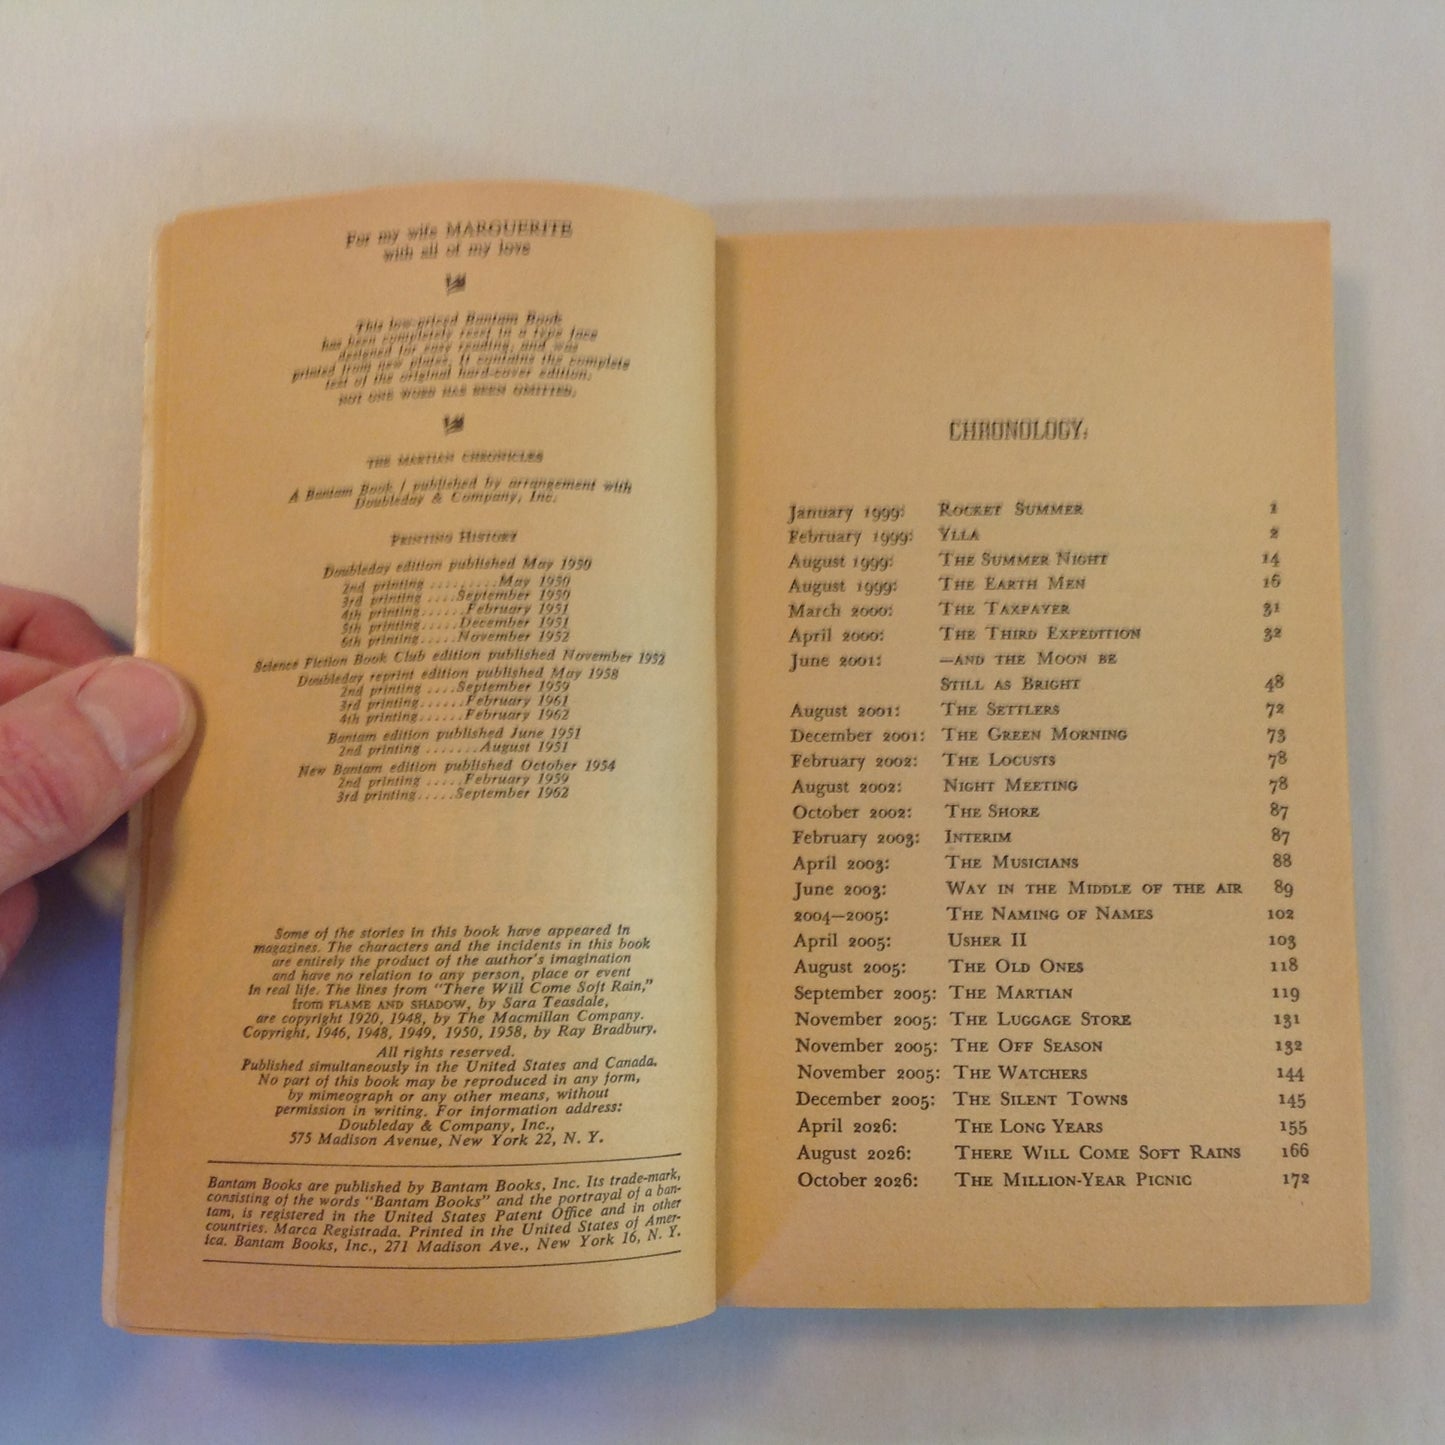 Vintage 1962 Mass Market Paperback The Martian Chronicles Ray Bradbury